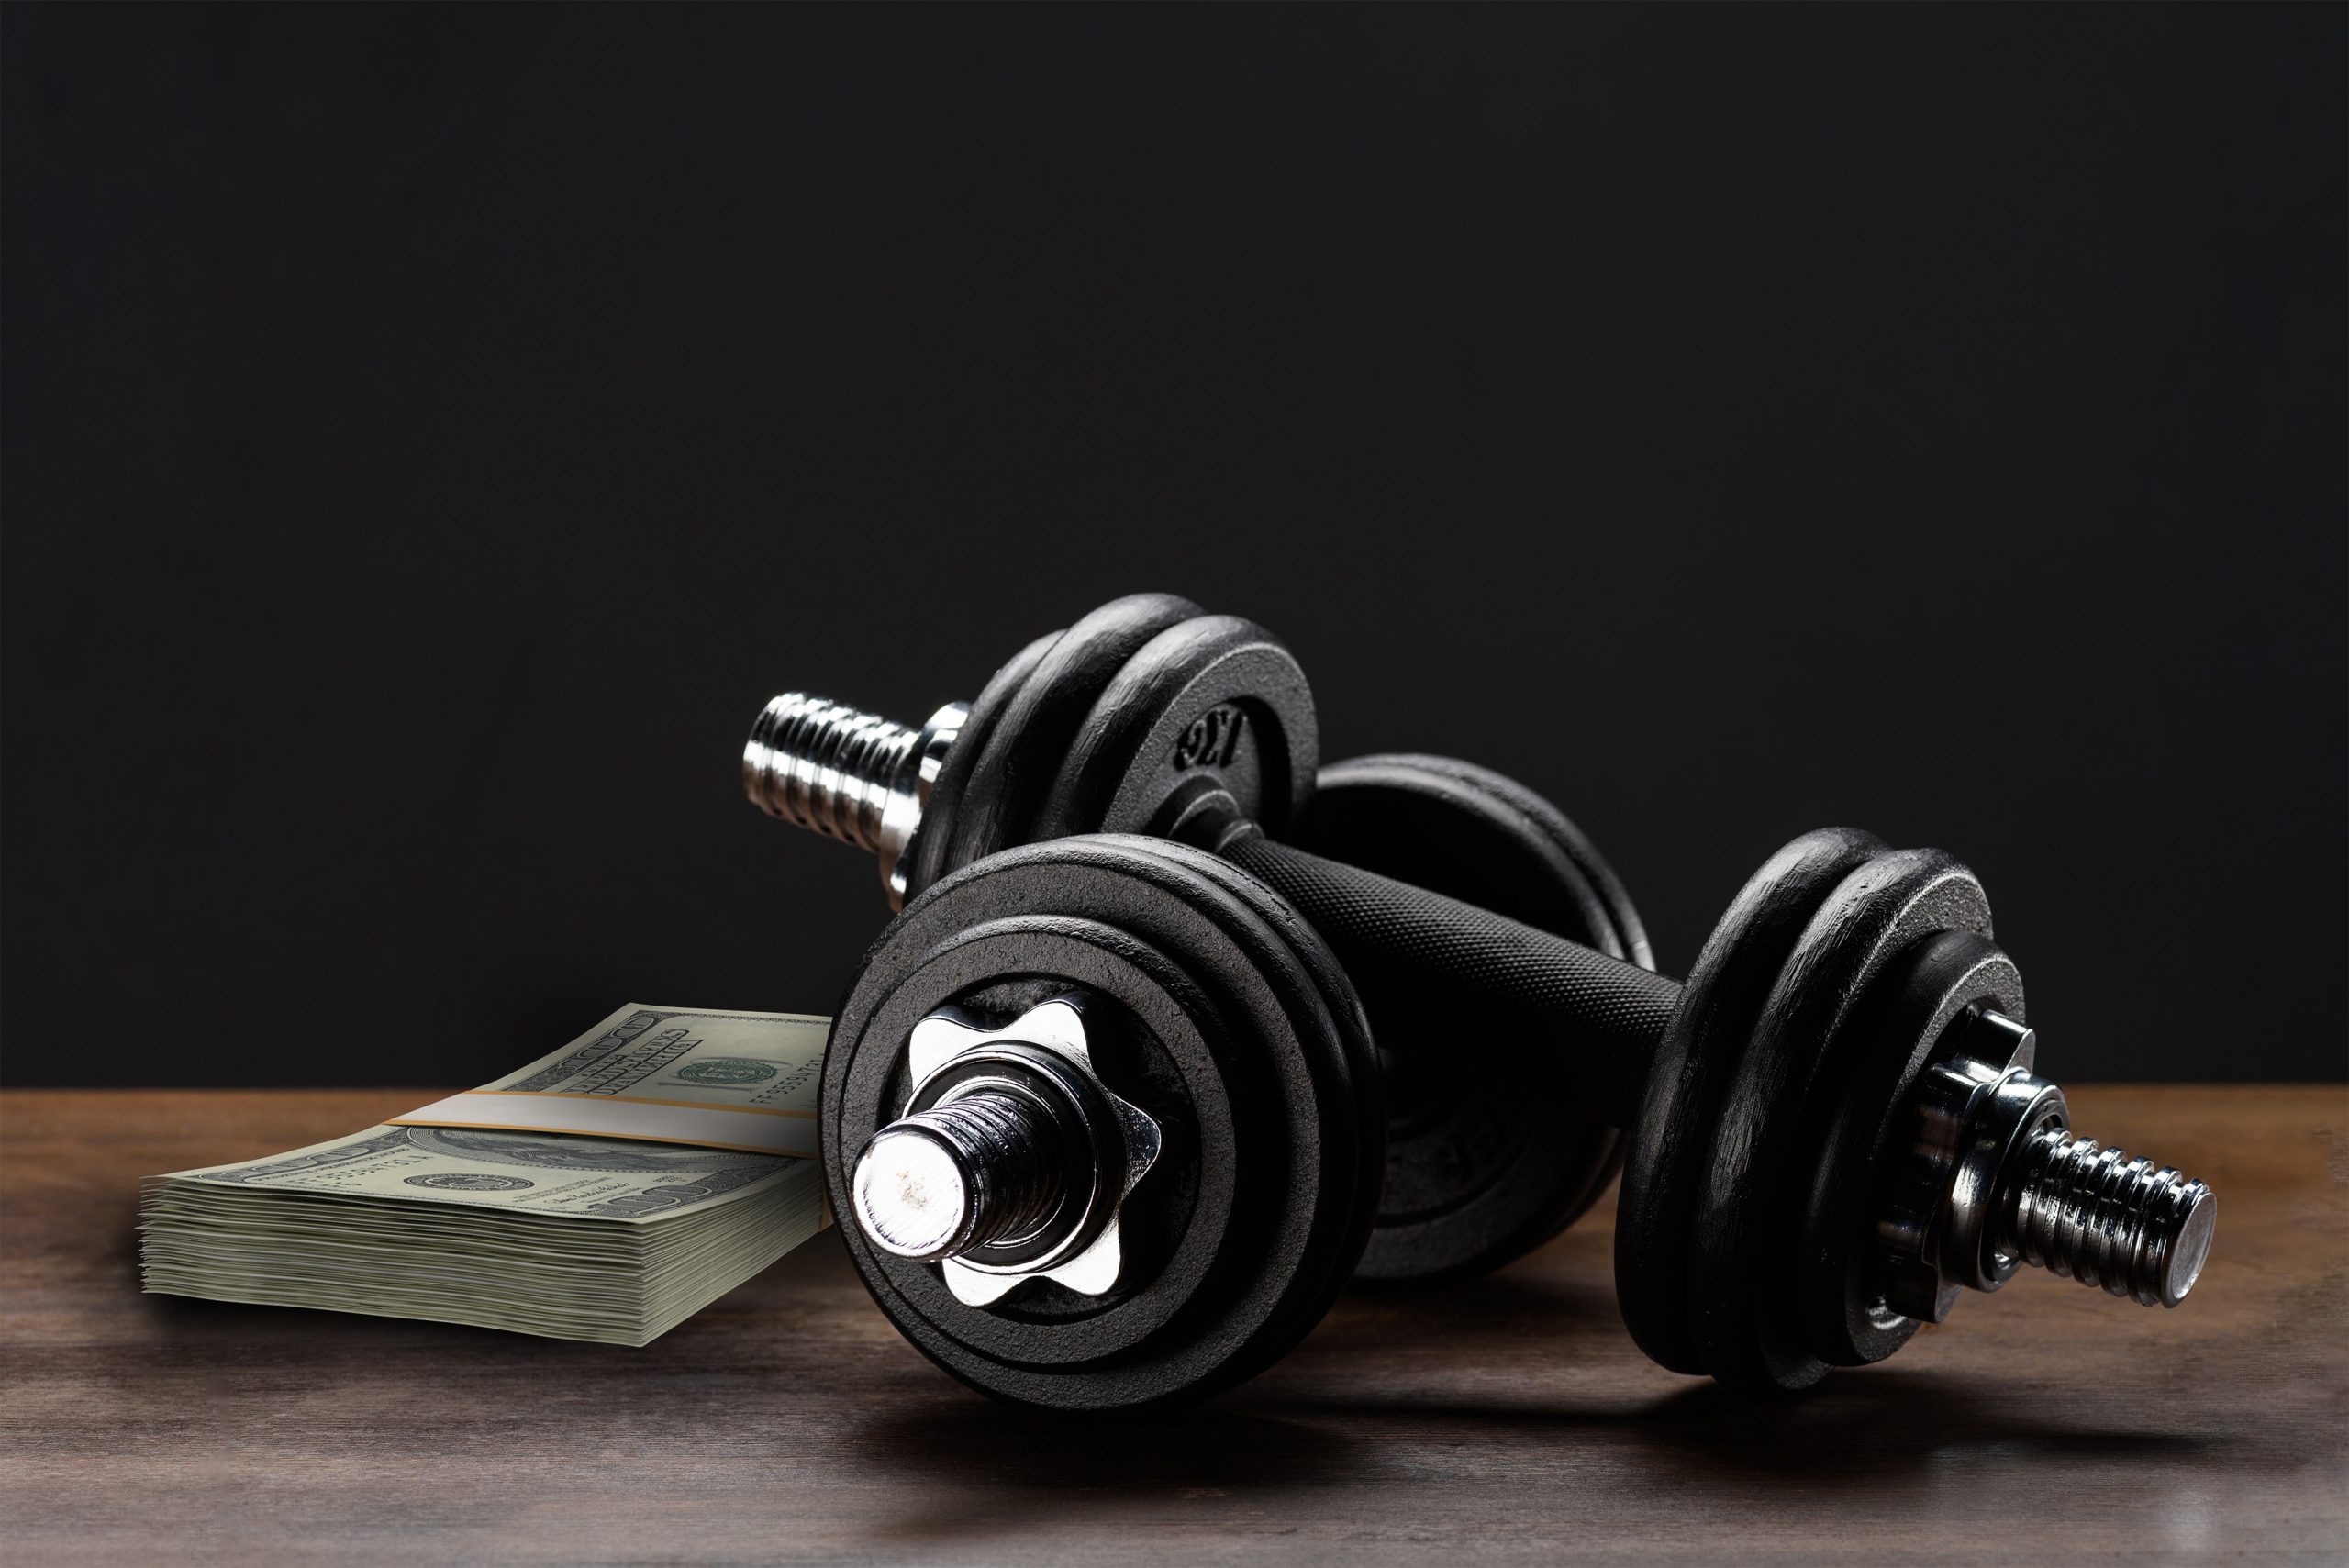 Bundles of $100 bills next to dumbells symbolizing monthly gym operating expenses